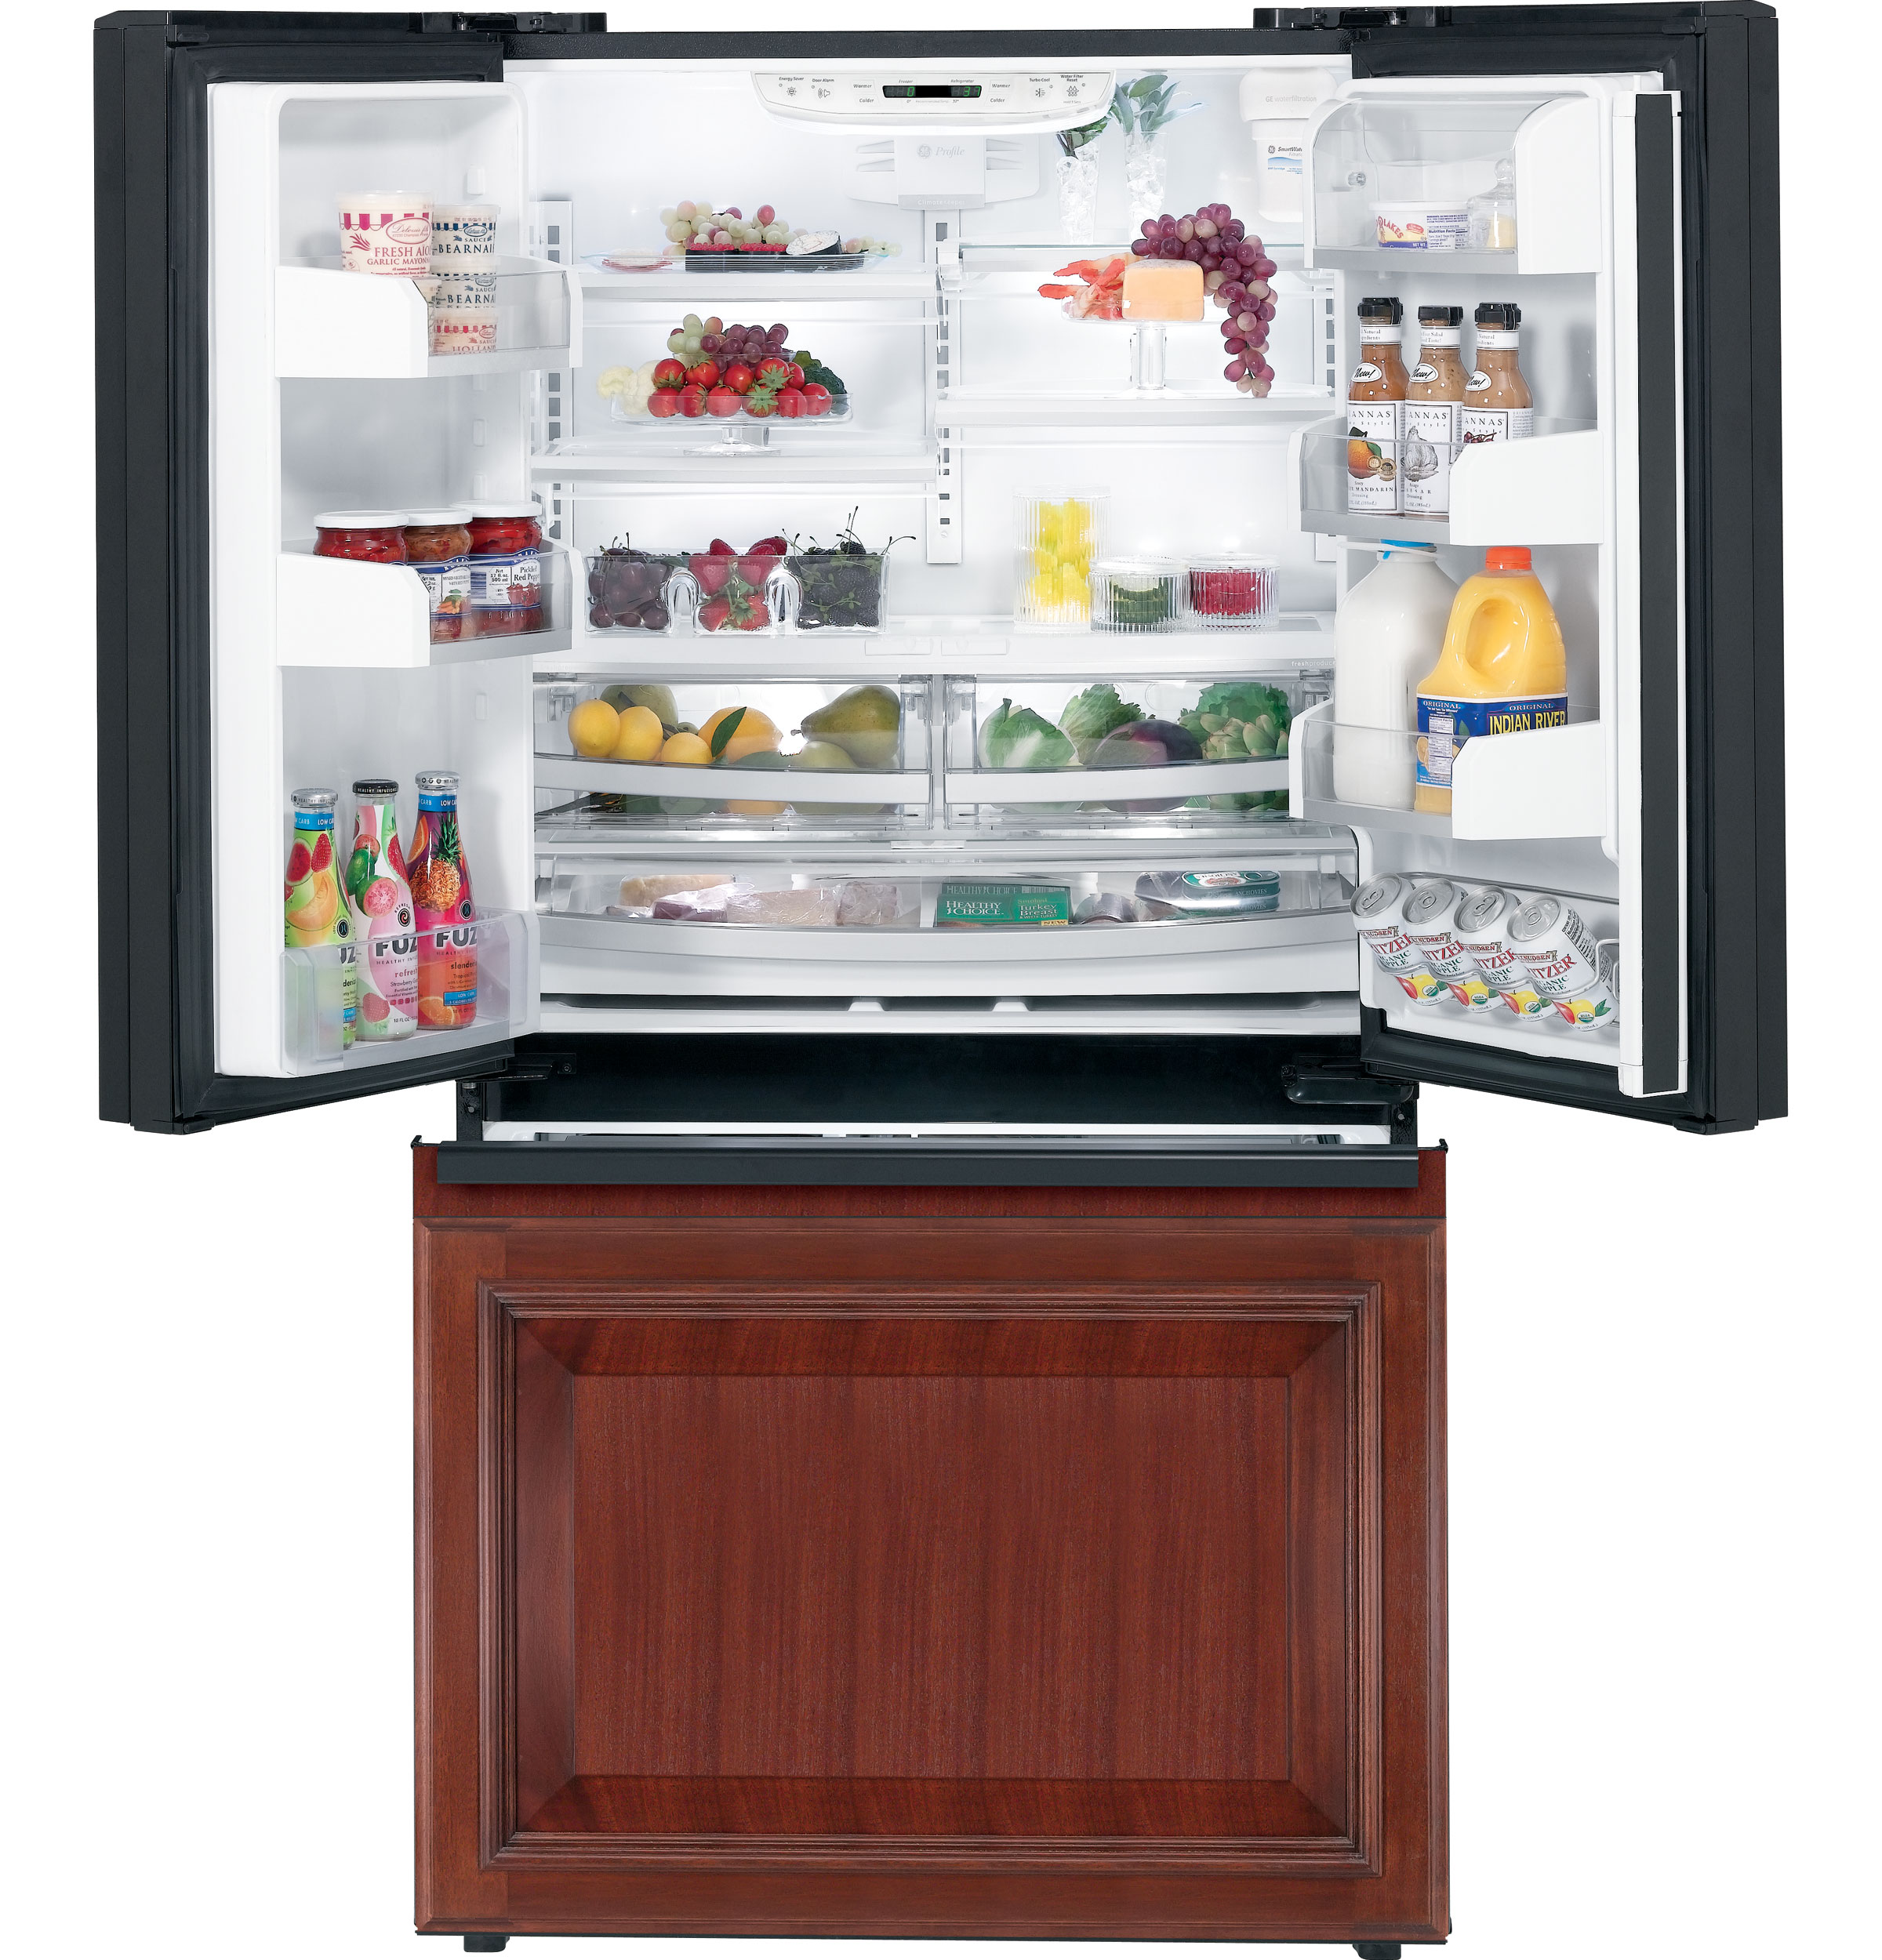 GE Profile™ 20.8 Cu. Ft. Counter-Depth French-Door Refrigerator